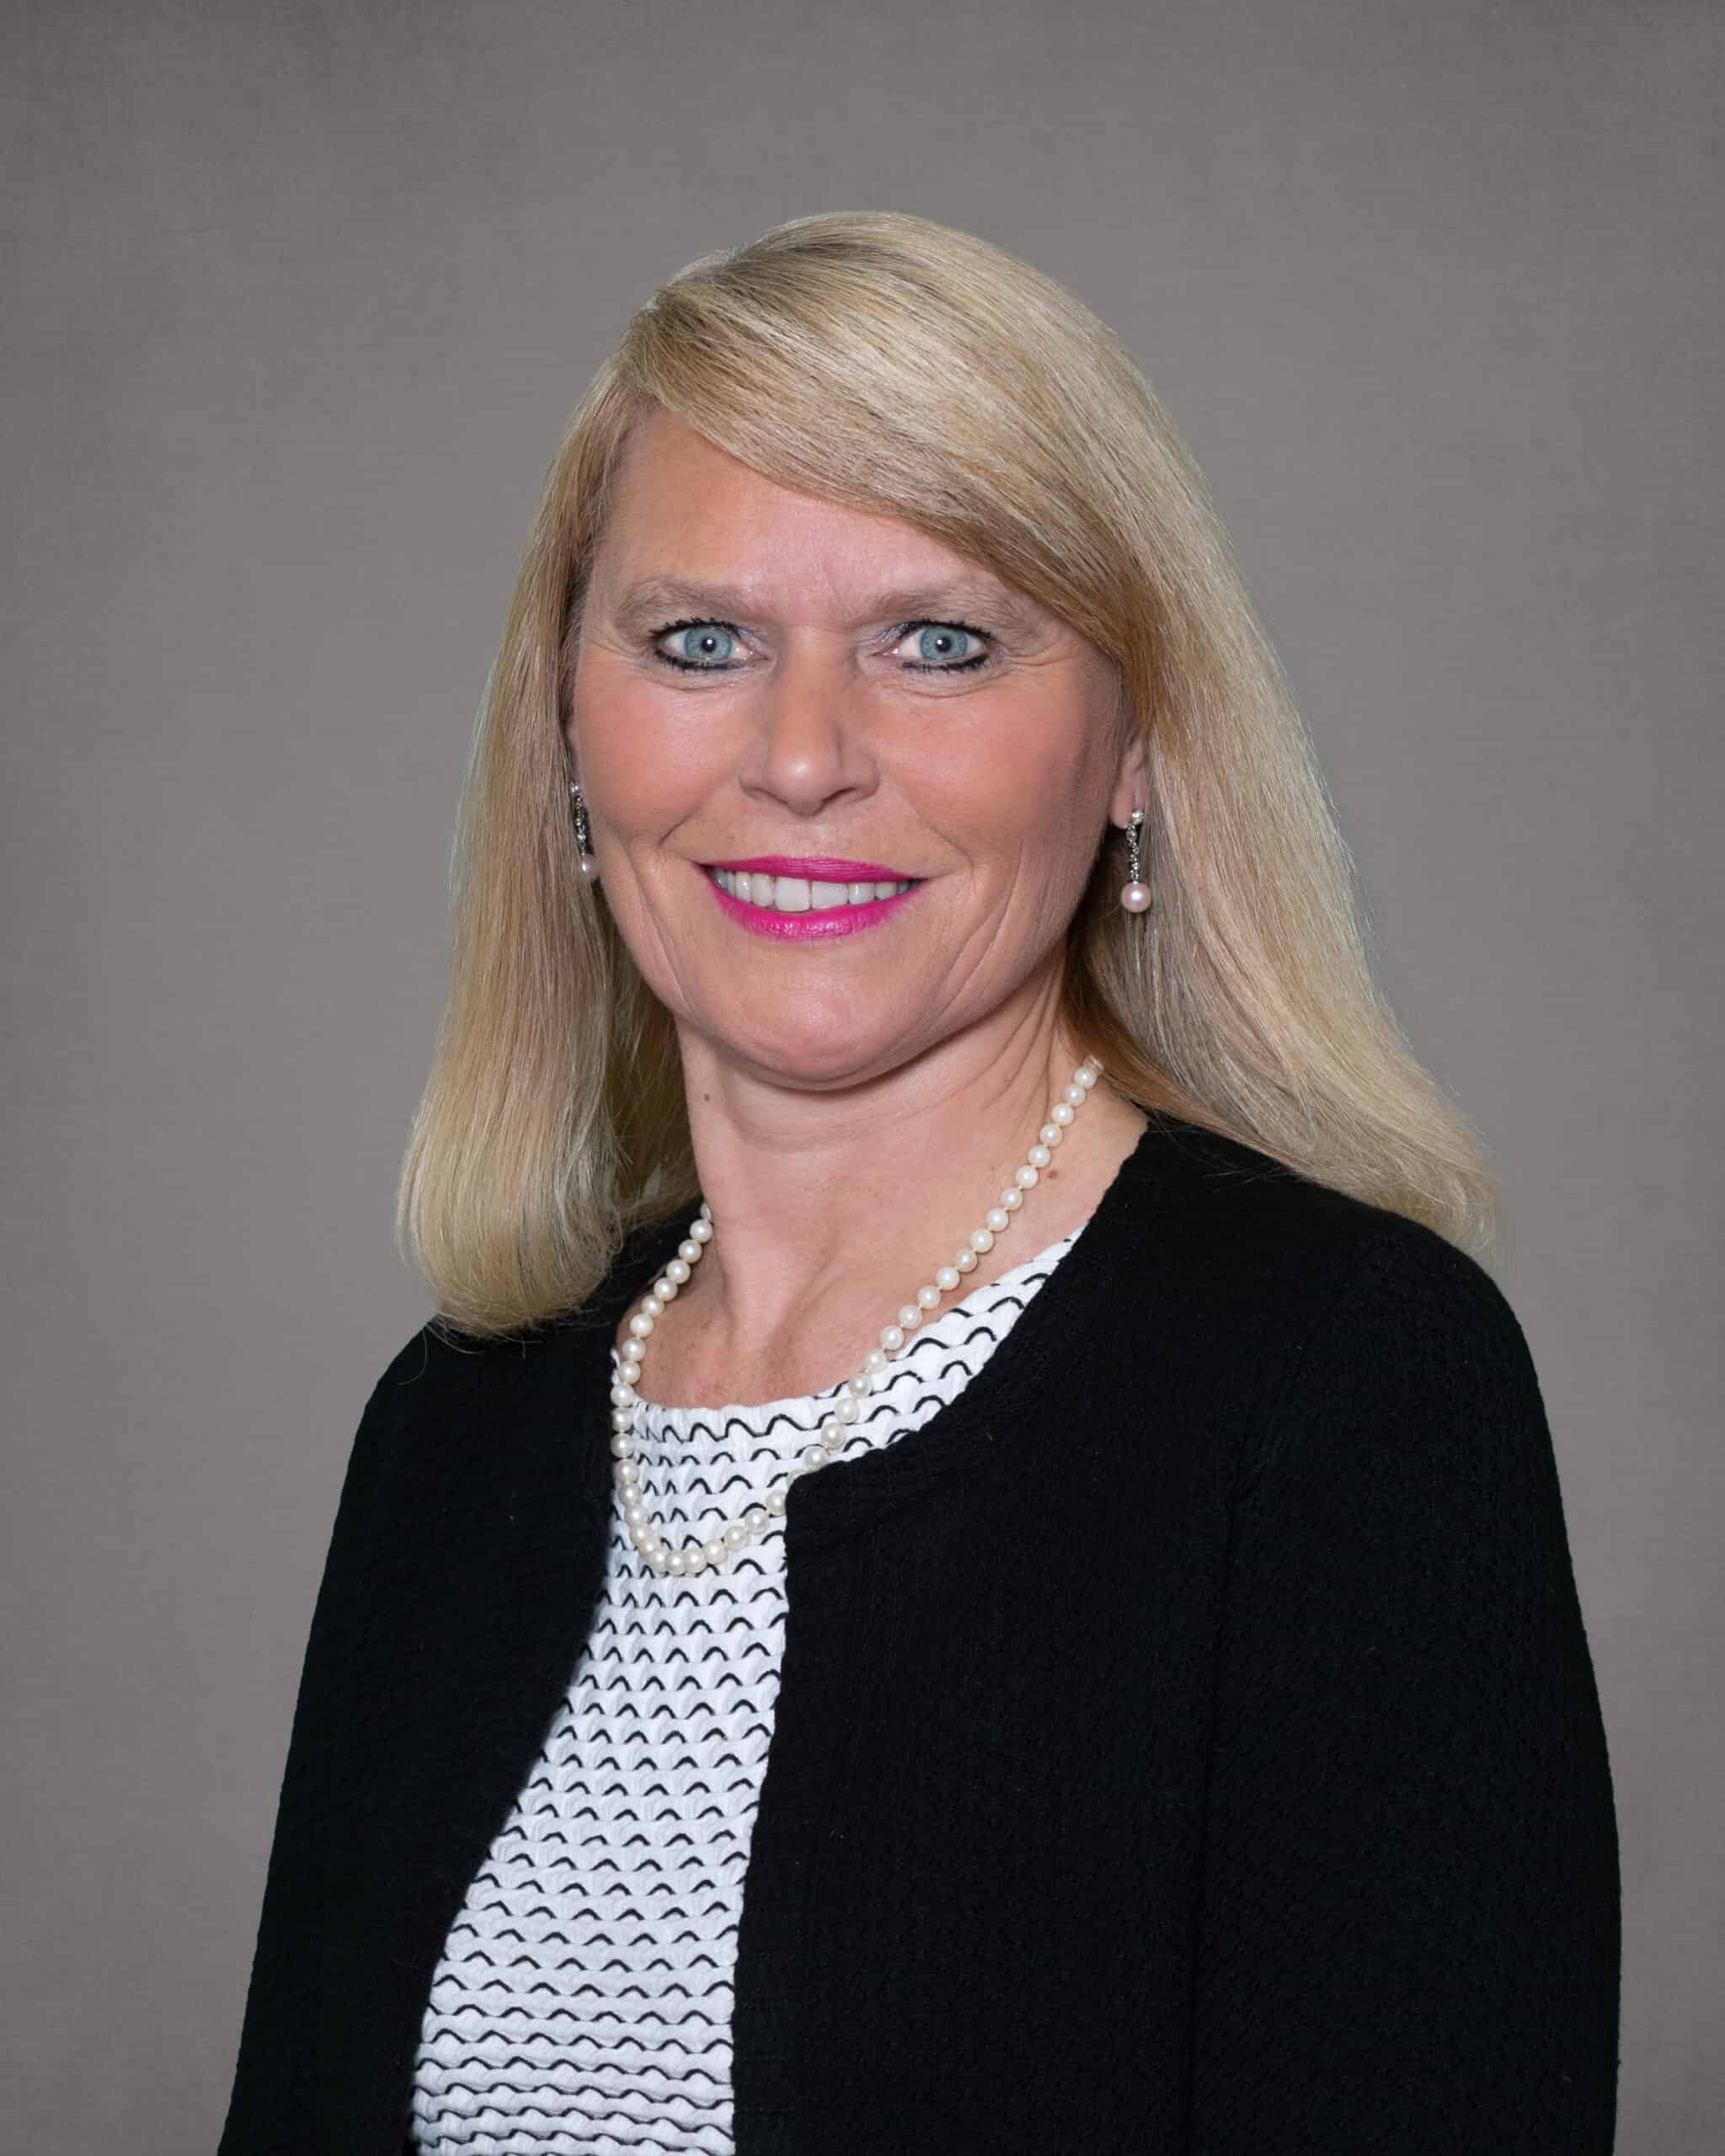 Peggy Boemmel, Chief Financial Officer